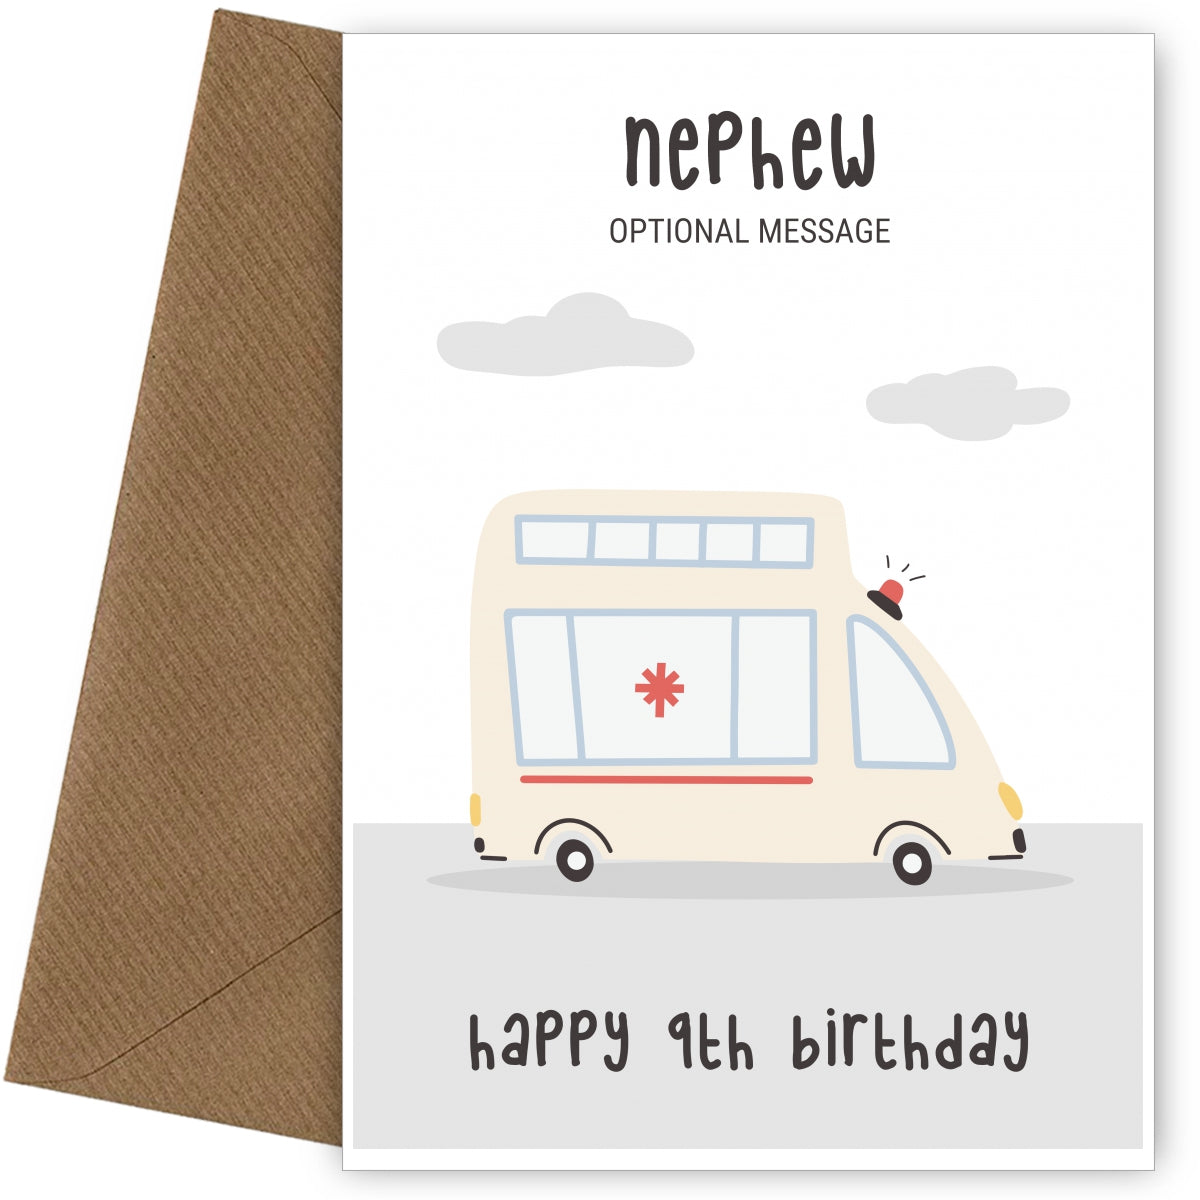 Fun Vehicles 9th Birthday Card for Nephew - Ambulance